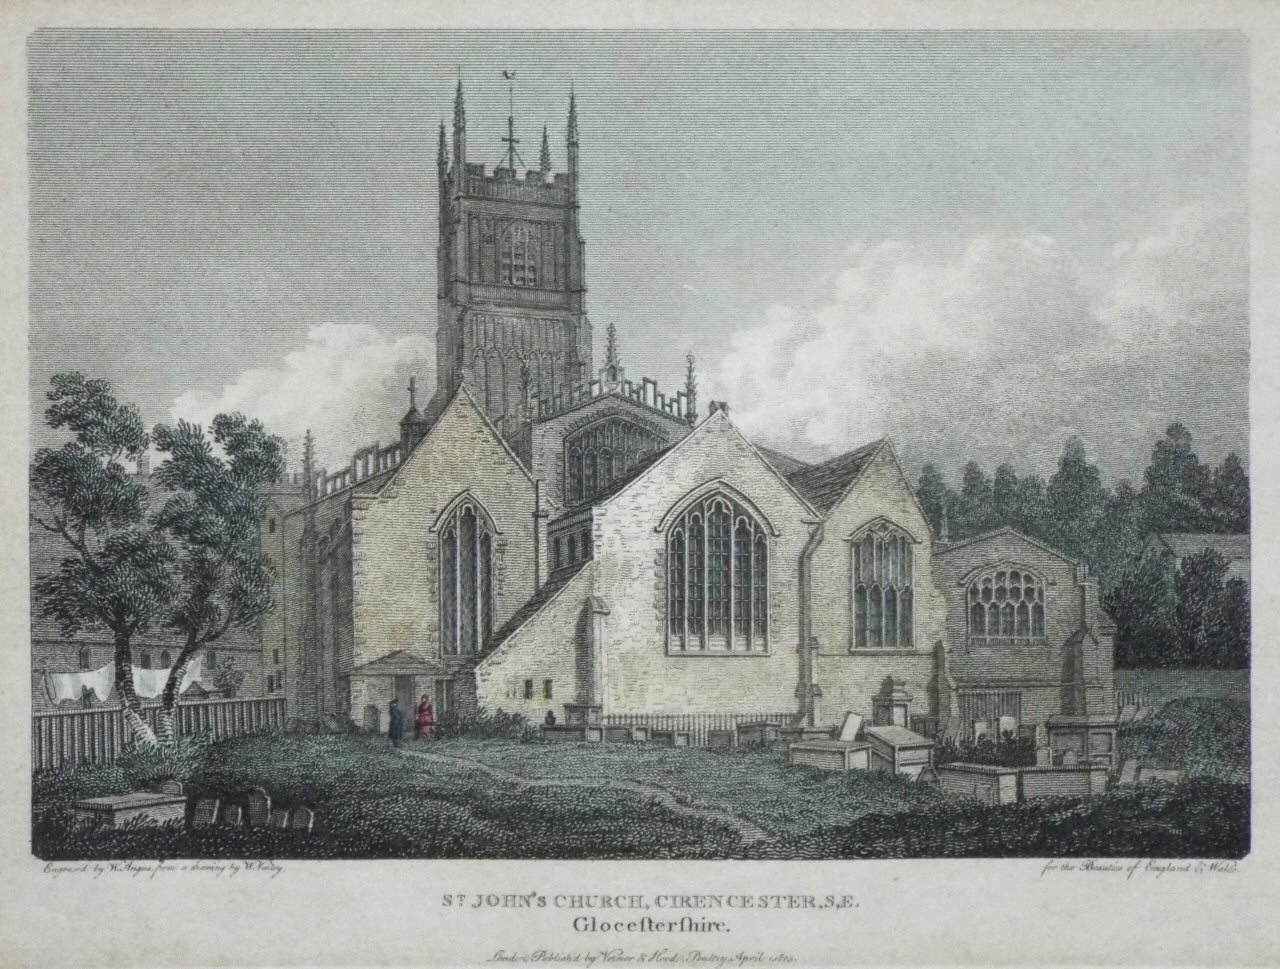 Print - St. John's Church, Cirencester. S.E. Glocestershire. - Angus